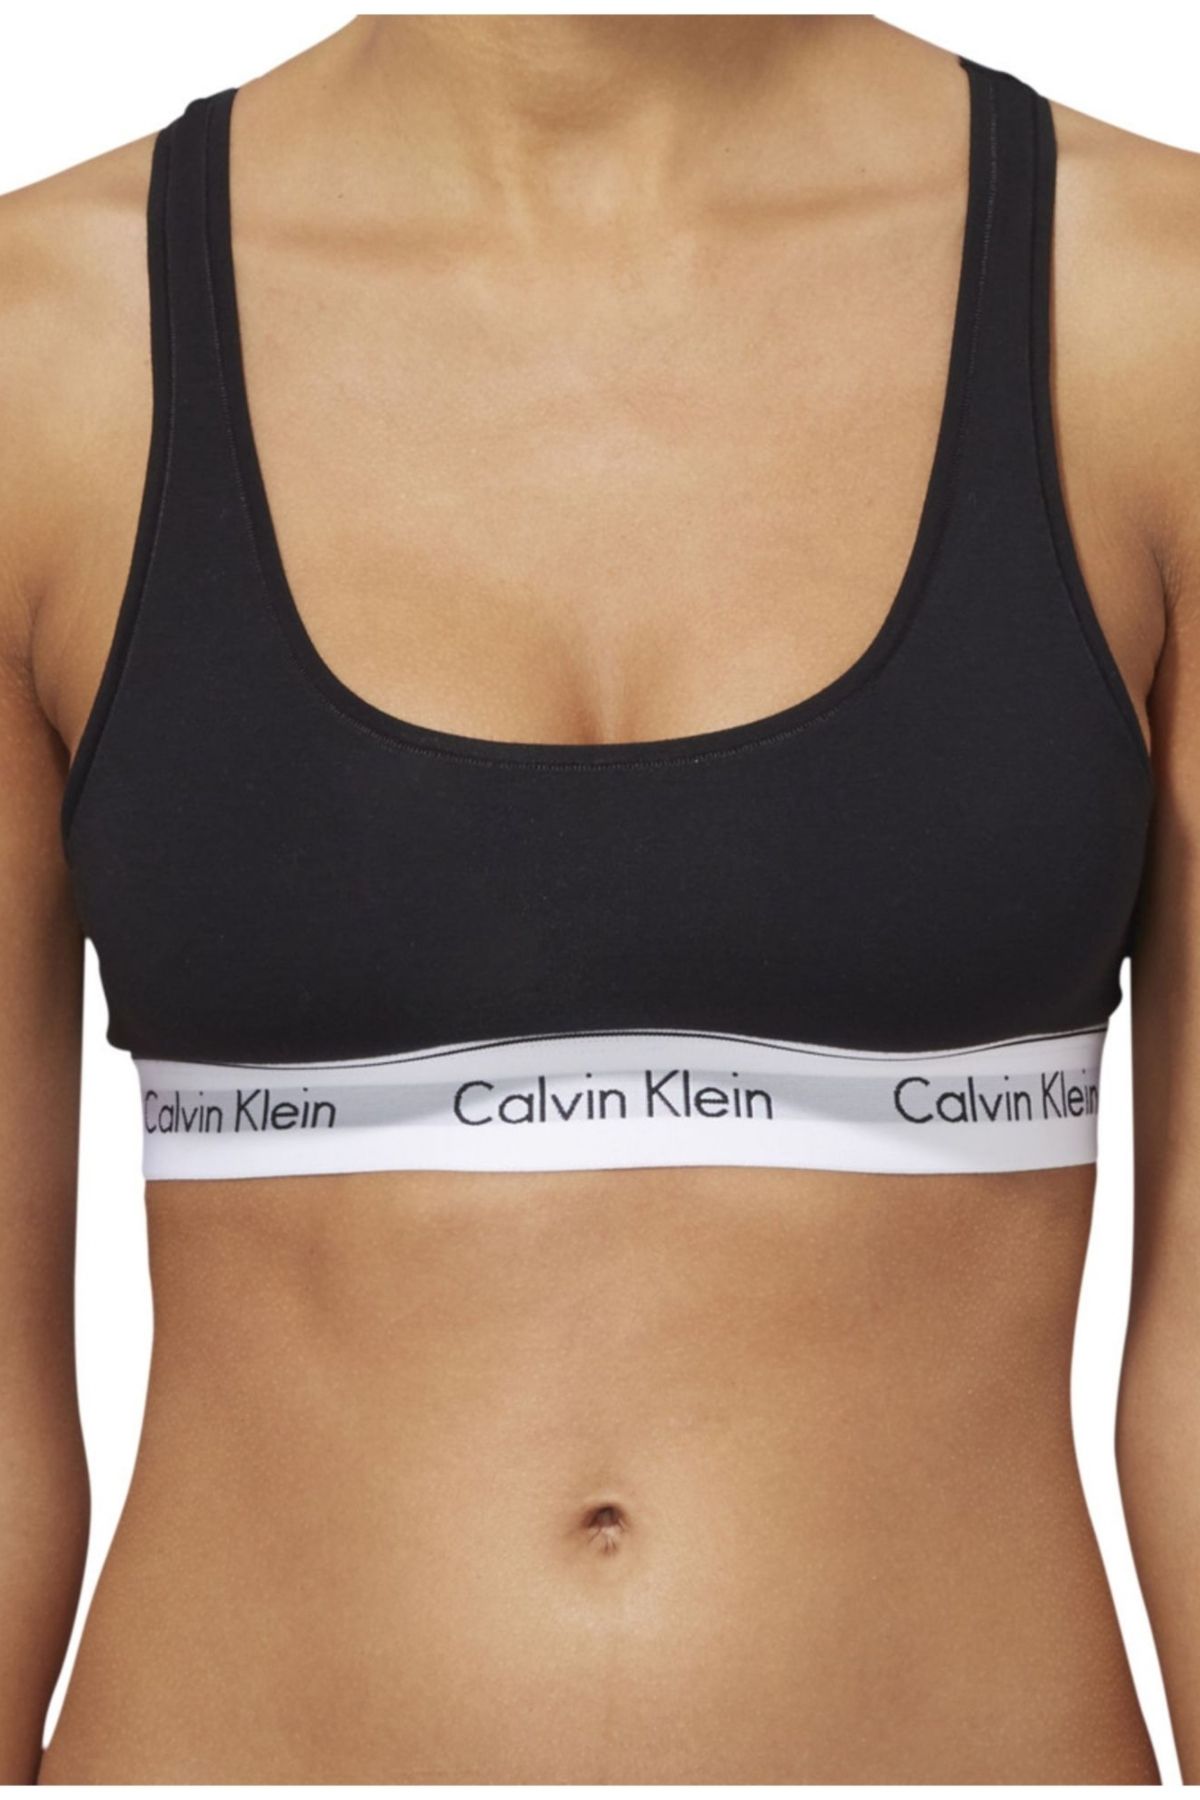 Calvin Klein Damen Lght Lined (Retro) Bralette, Schwarz (Black 001